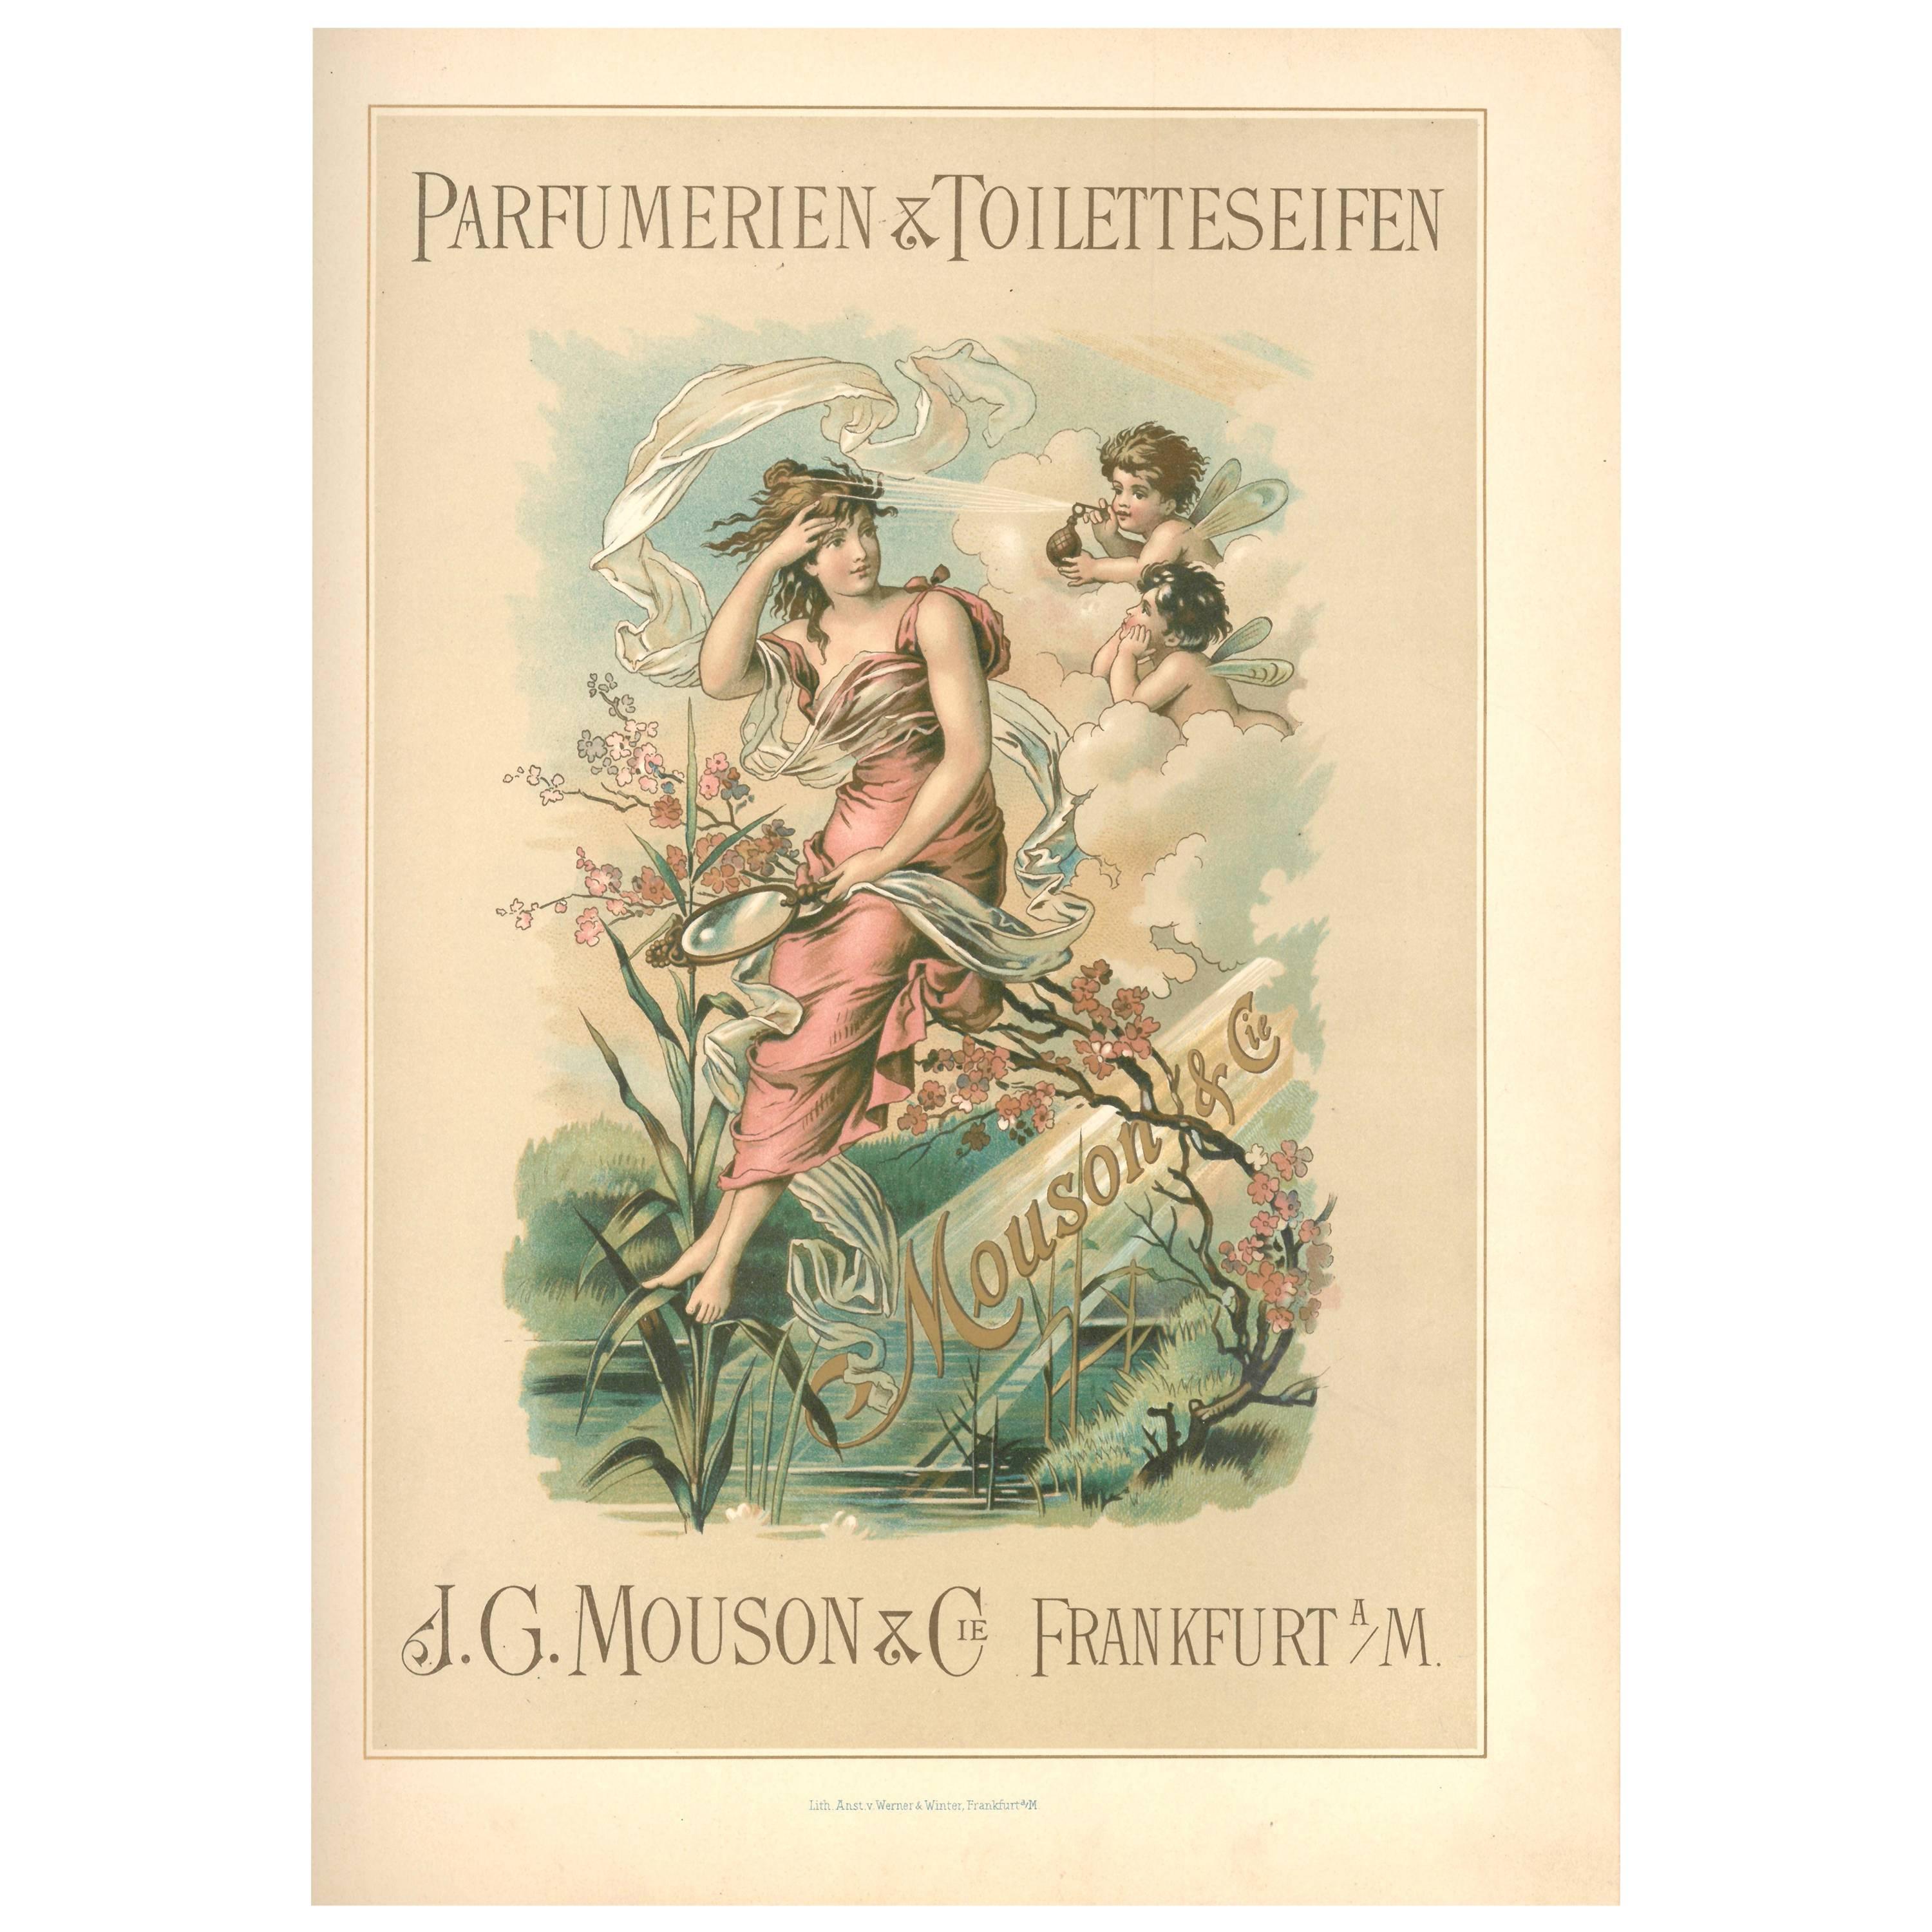 Parfumerien & Toiletteseifen Mouson & Co. Frankfurt (Book) For Sale